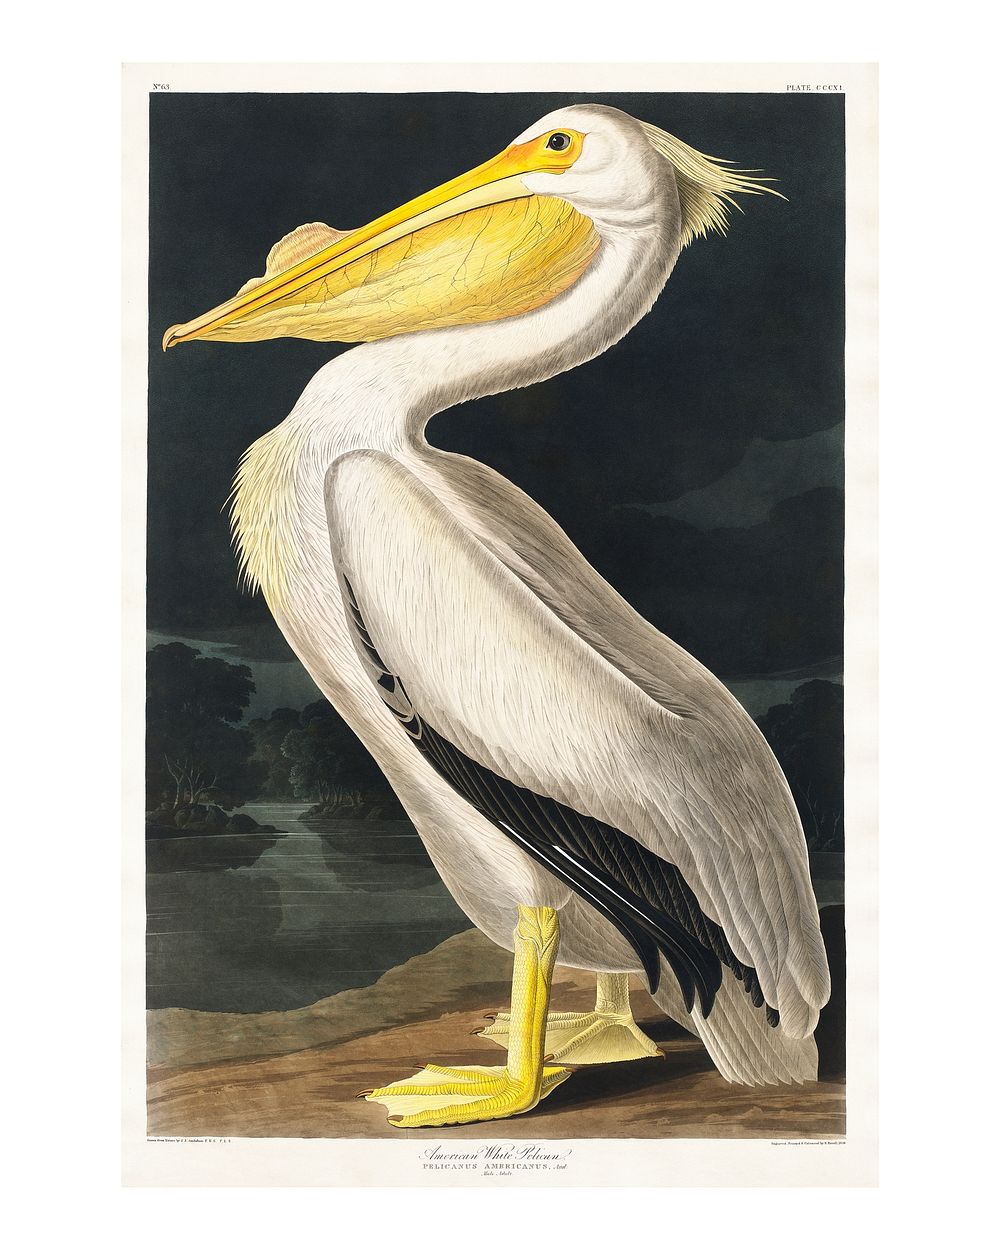 American White Pelican from Birds of America vintage illustration by John James Audubon. Digitally enhanced by rawpixel.